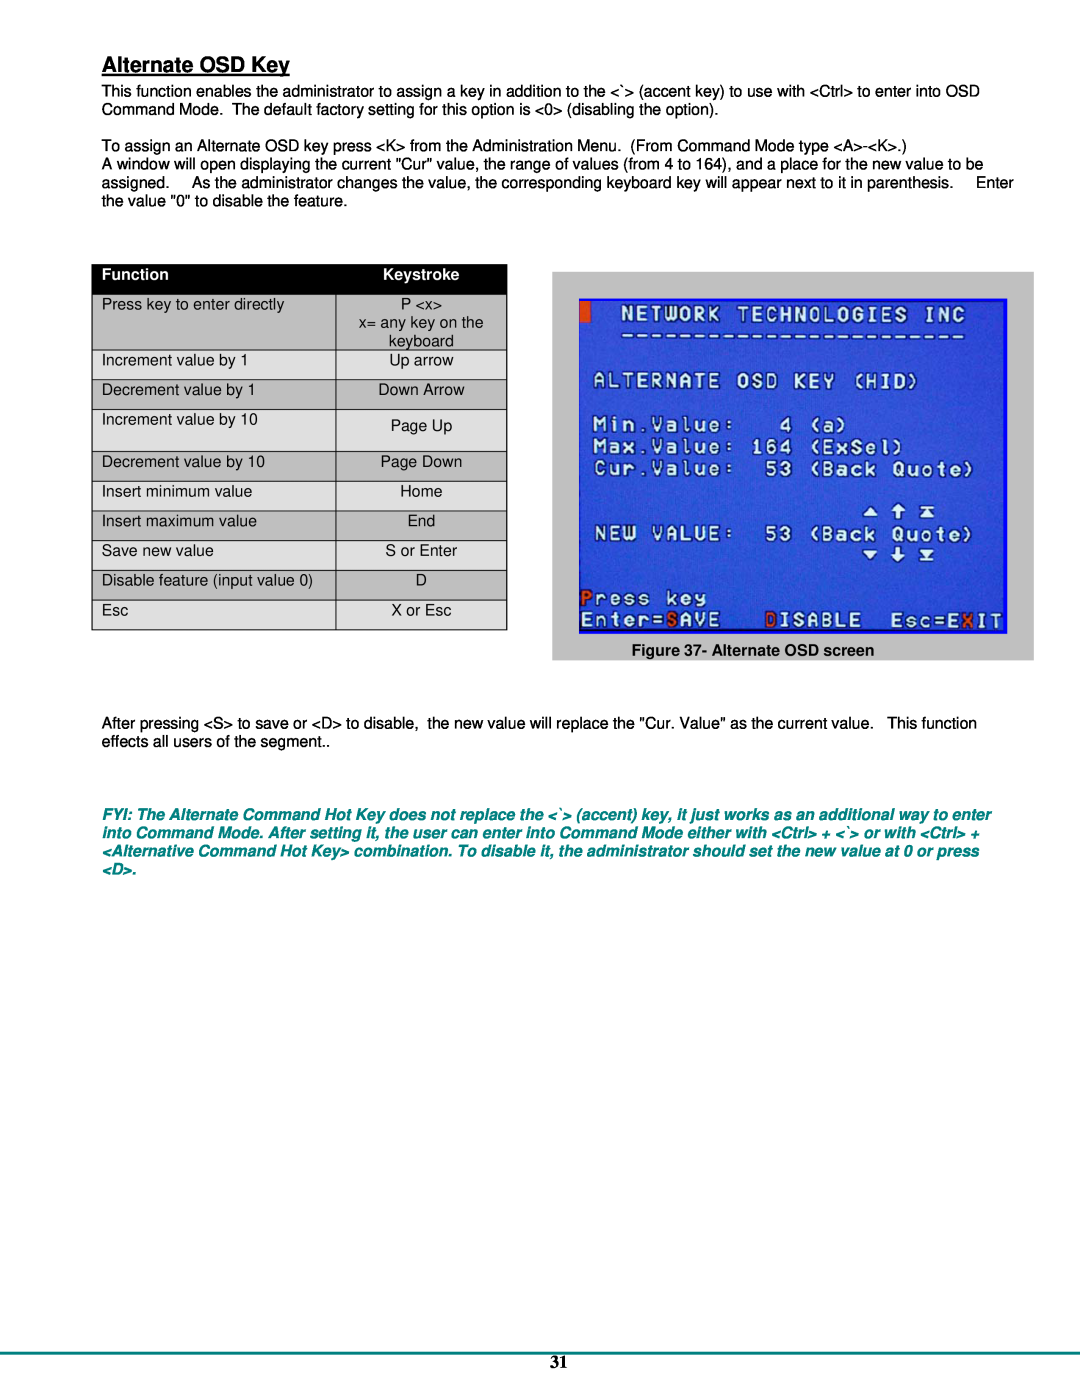 Network Technologies CAT5 operation manual Alternate OSD Key, Alternate OSD screen, Function, Keystroke 